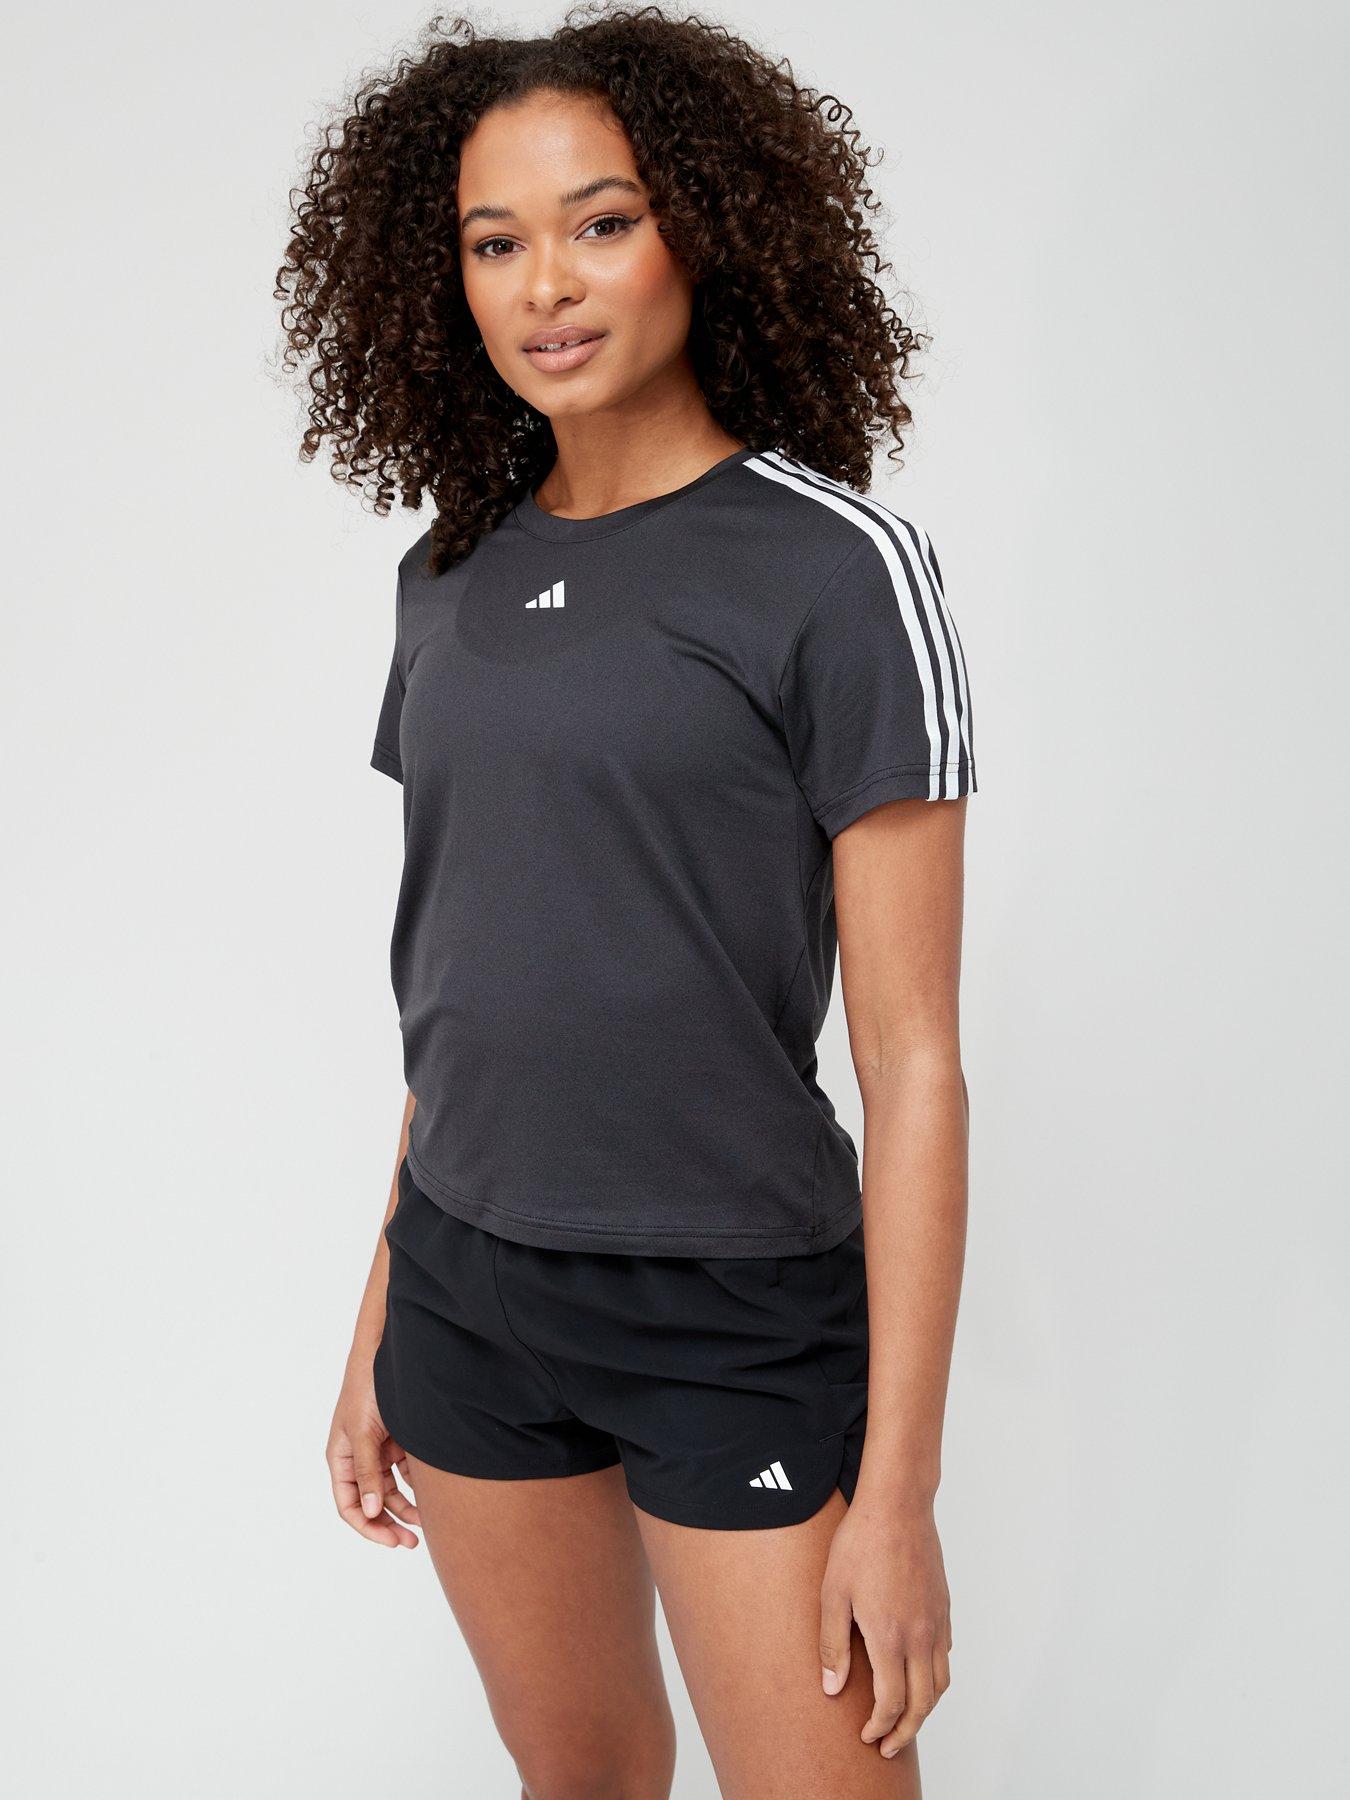 | | t-shirts Very | Ireland Adidas Women Tops | Black &